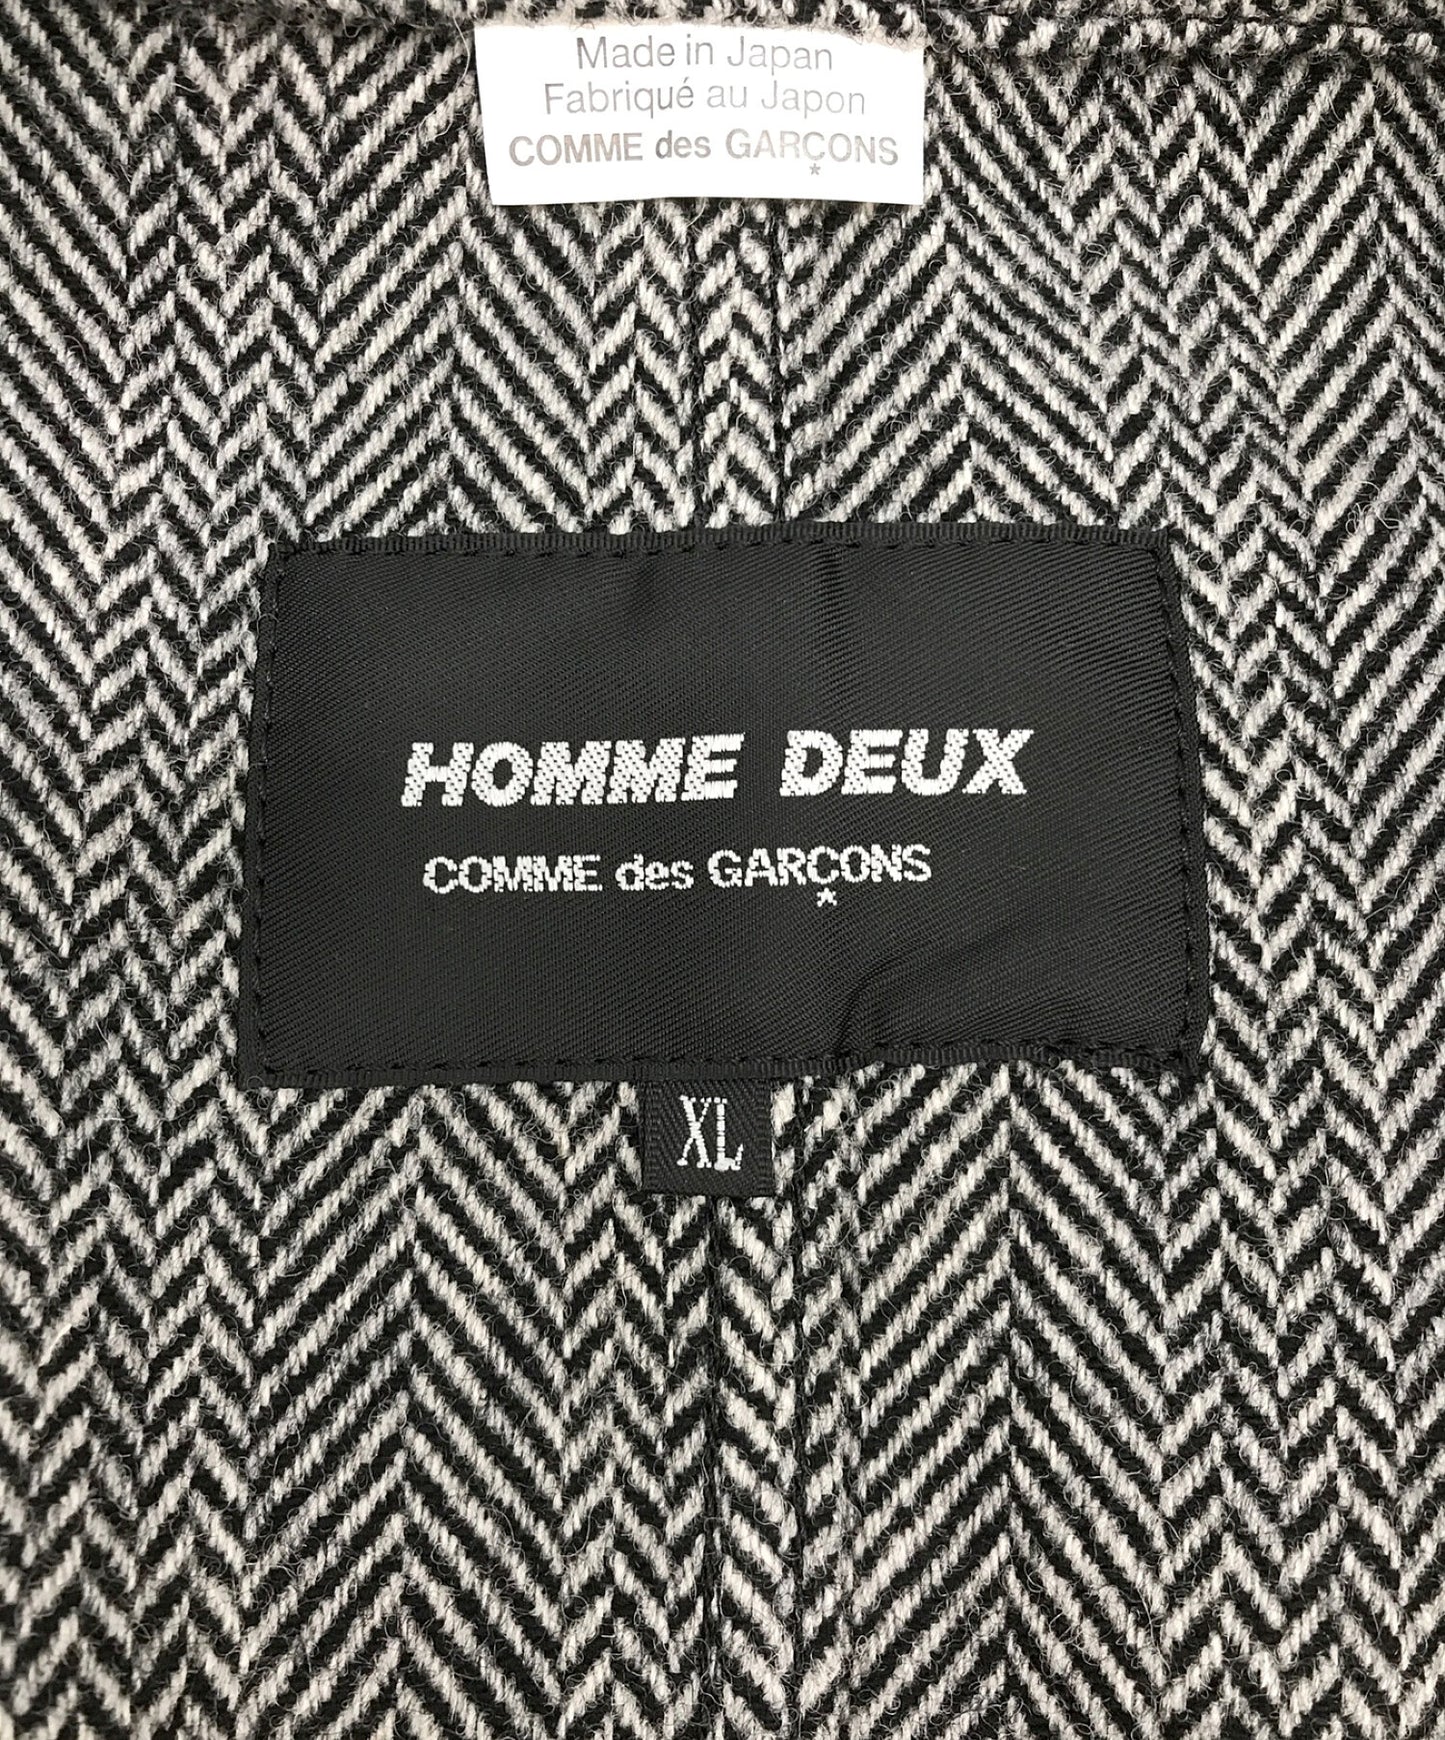 COMME DES GARCONS HOMME DEUX裁縫夾克夾克DT-J057